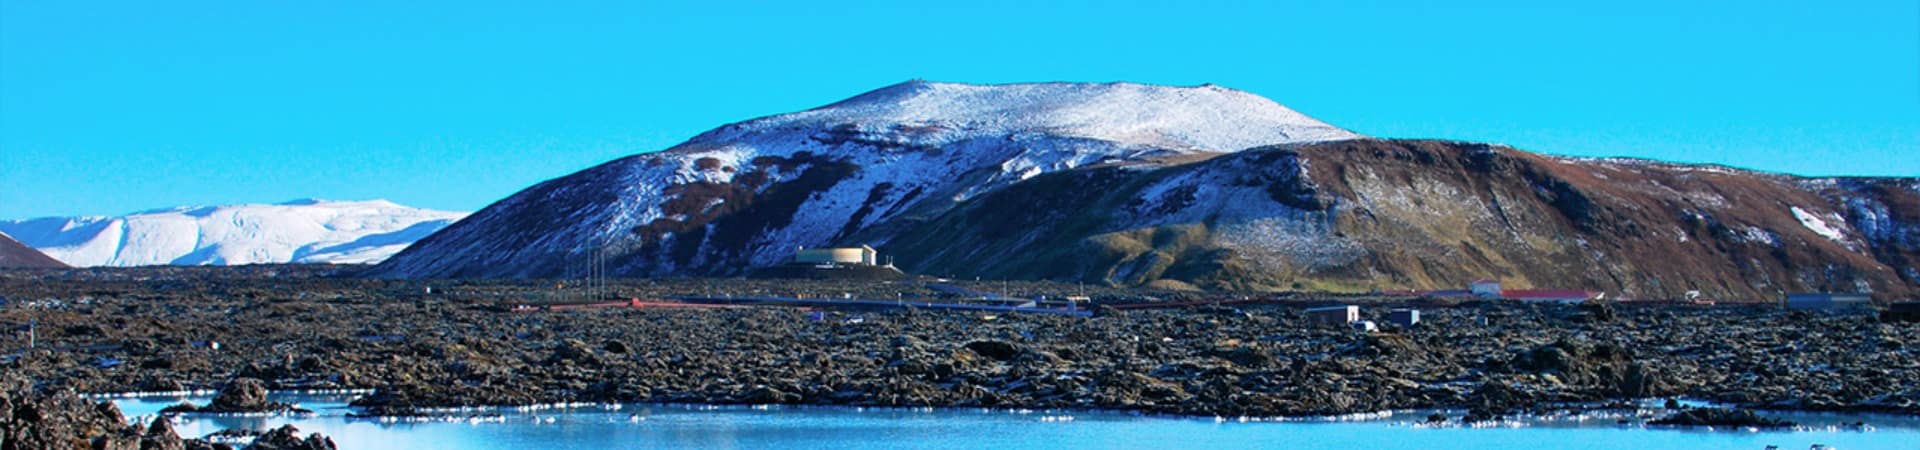 Islandia lagoa azul